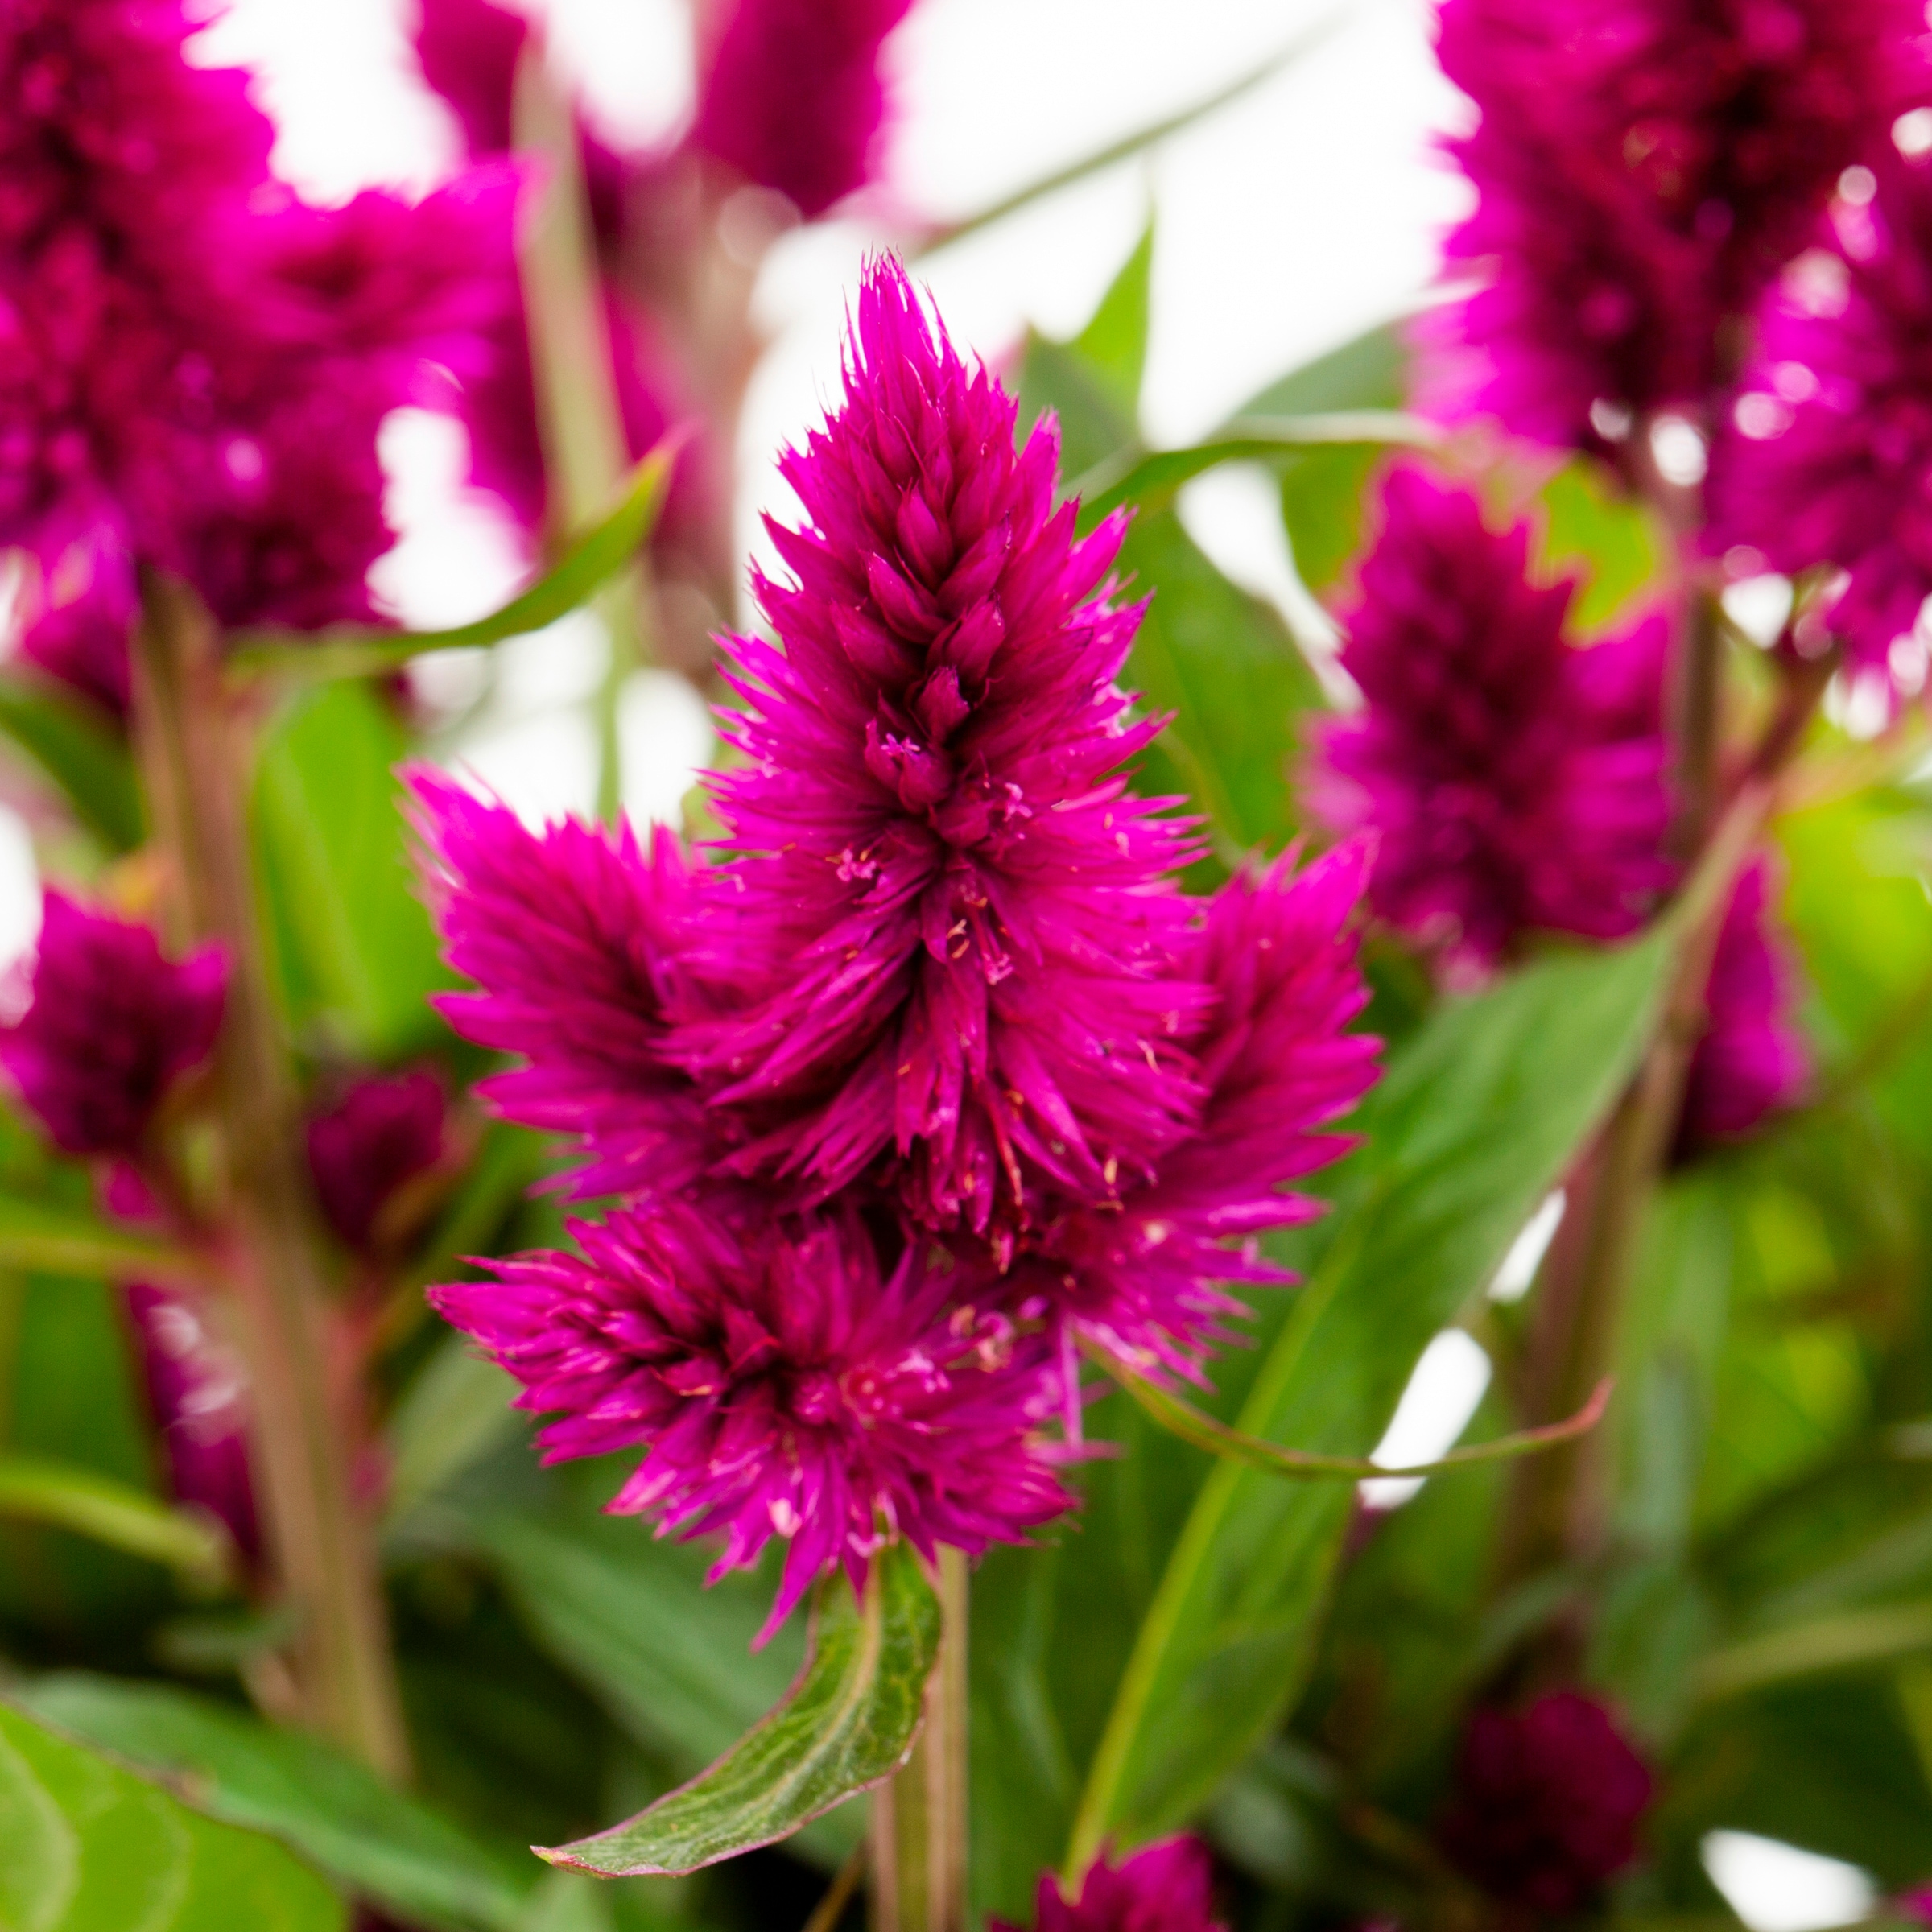 purple cone shaped flowers